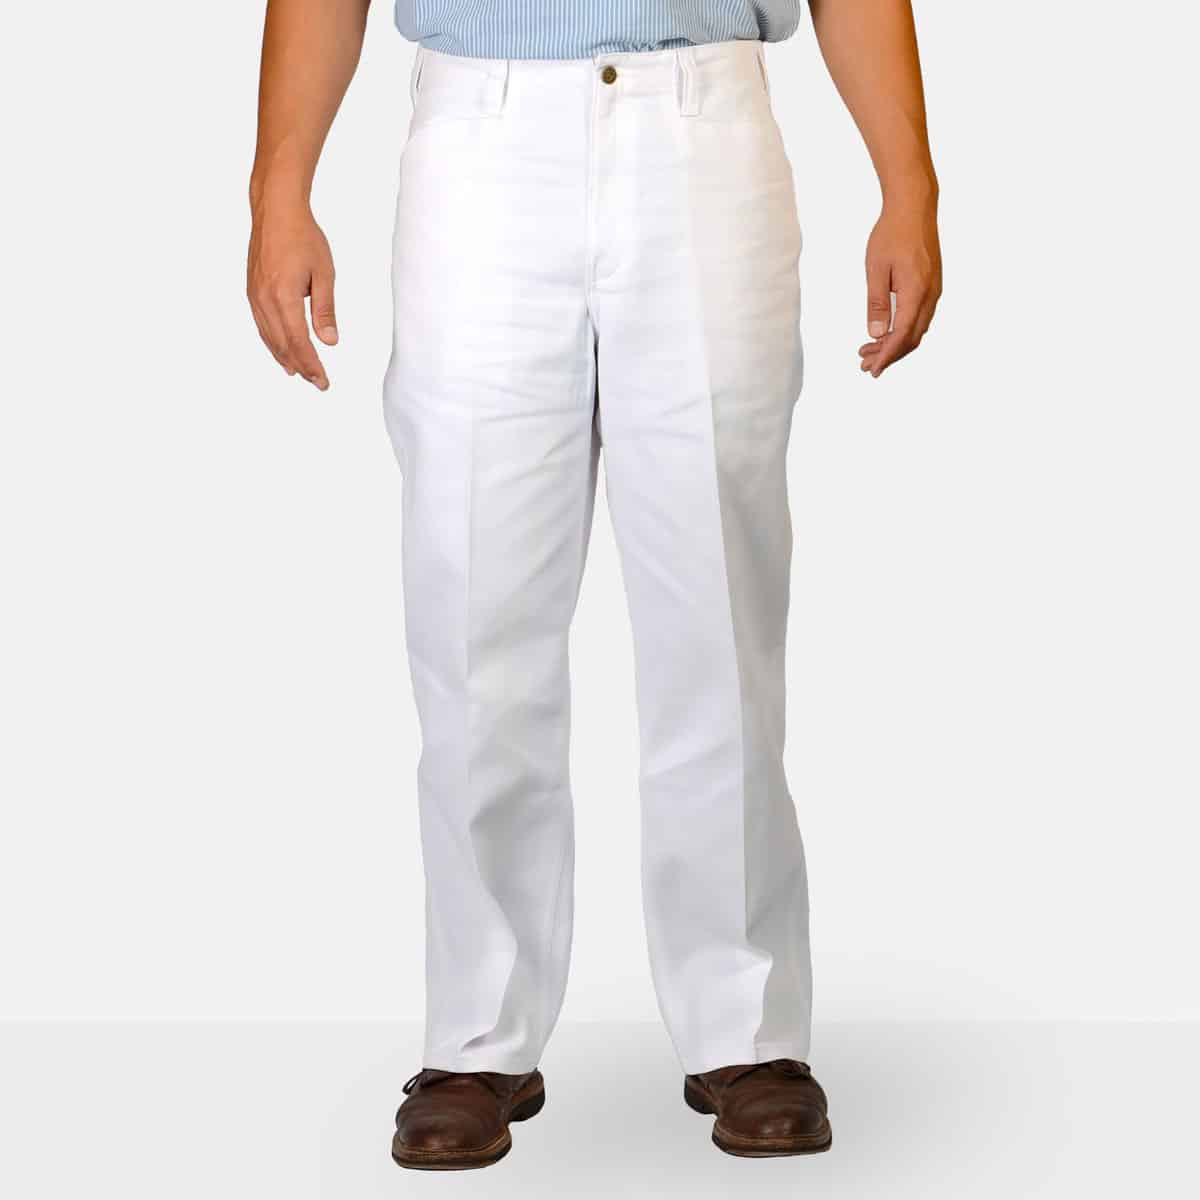 Womens White Cotton Blend Formal Trouser  Pants